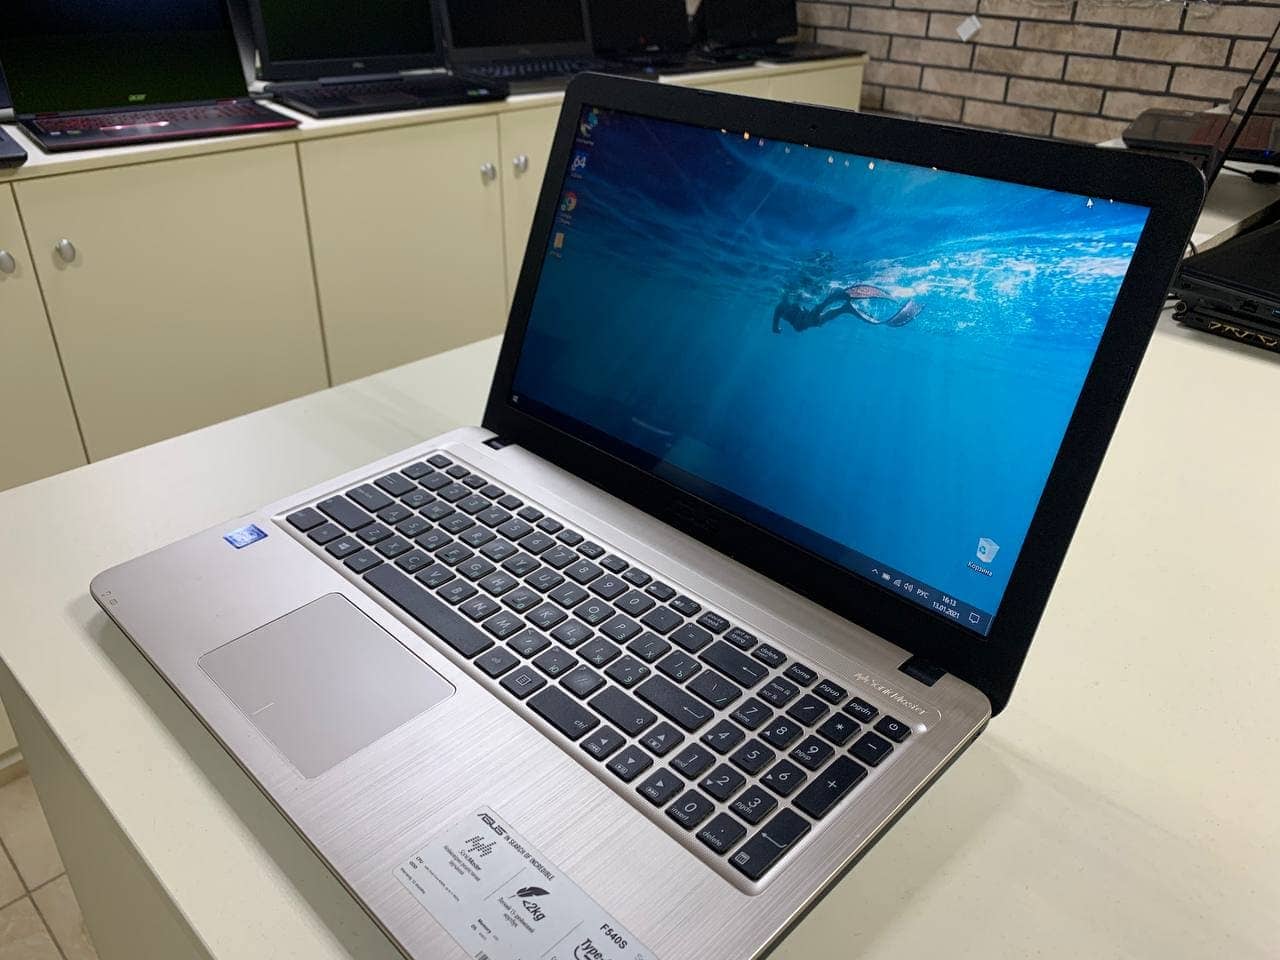 Ноутбук Asus K55vd Цена Украина